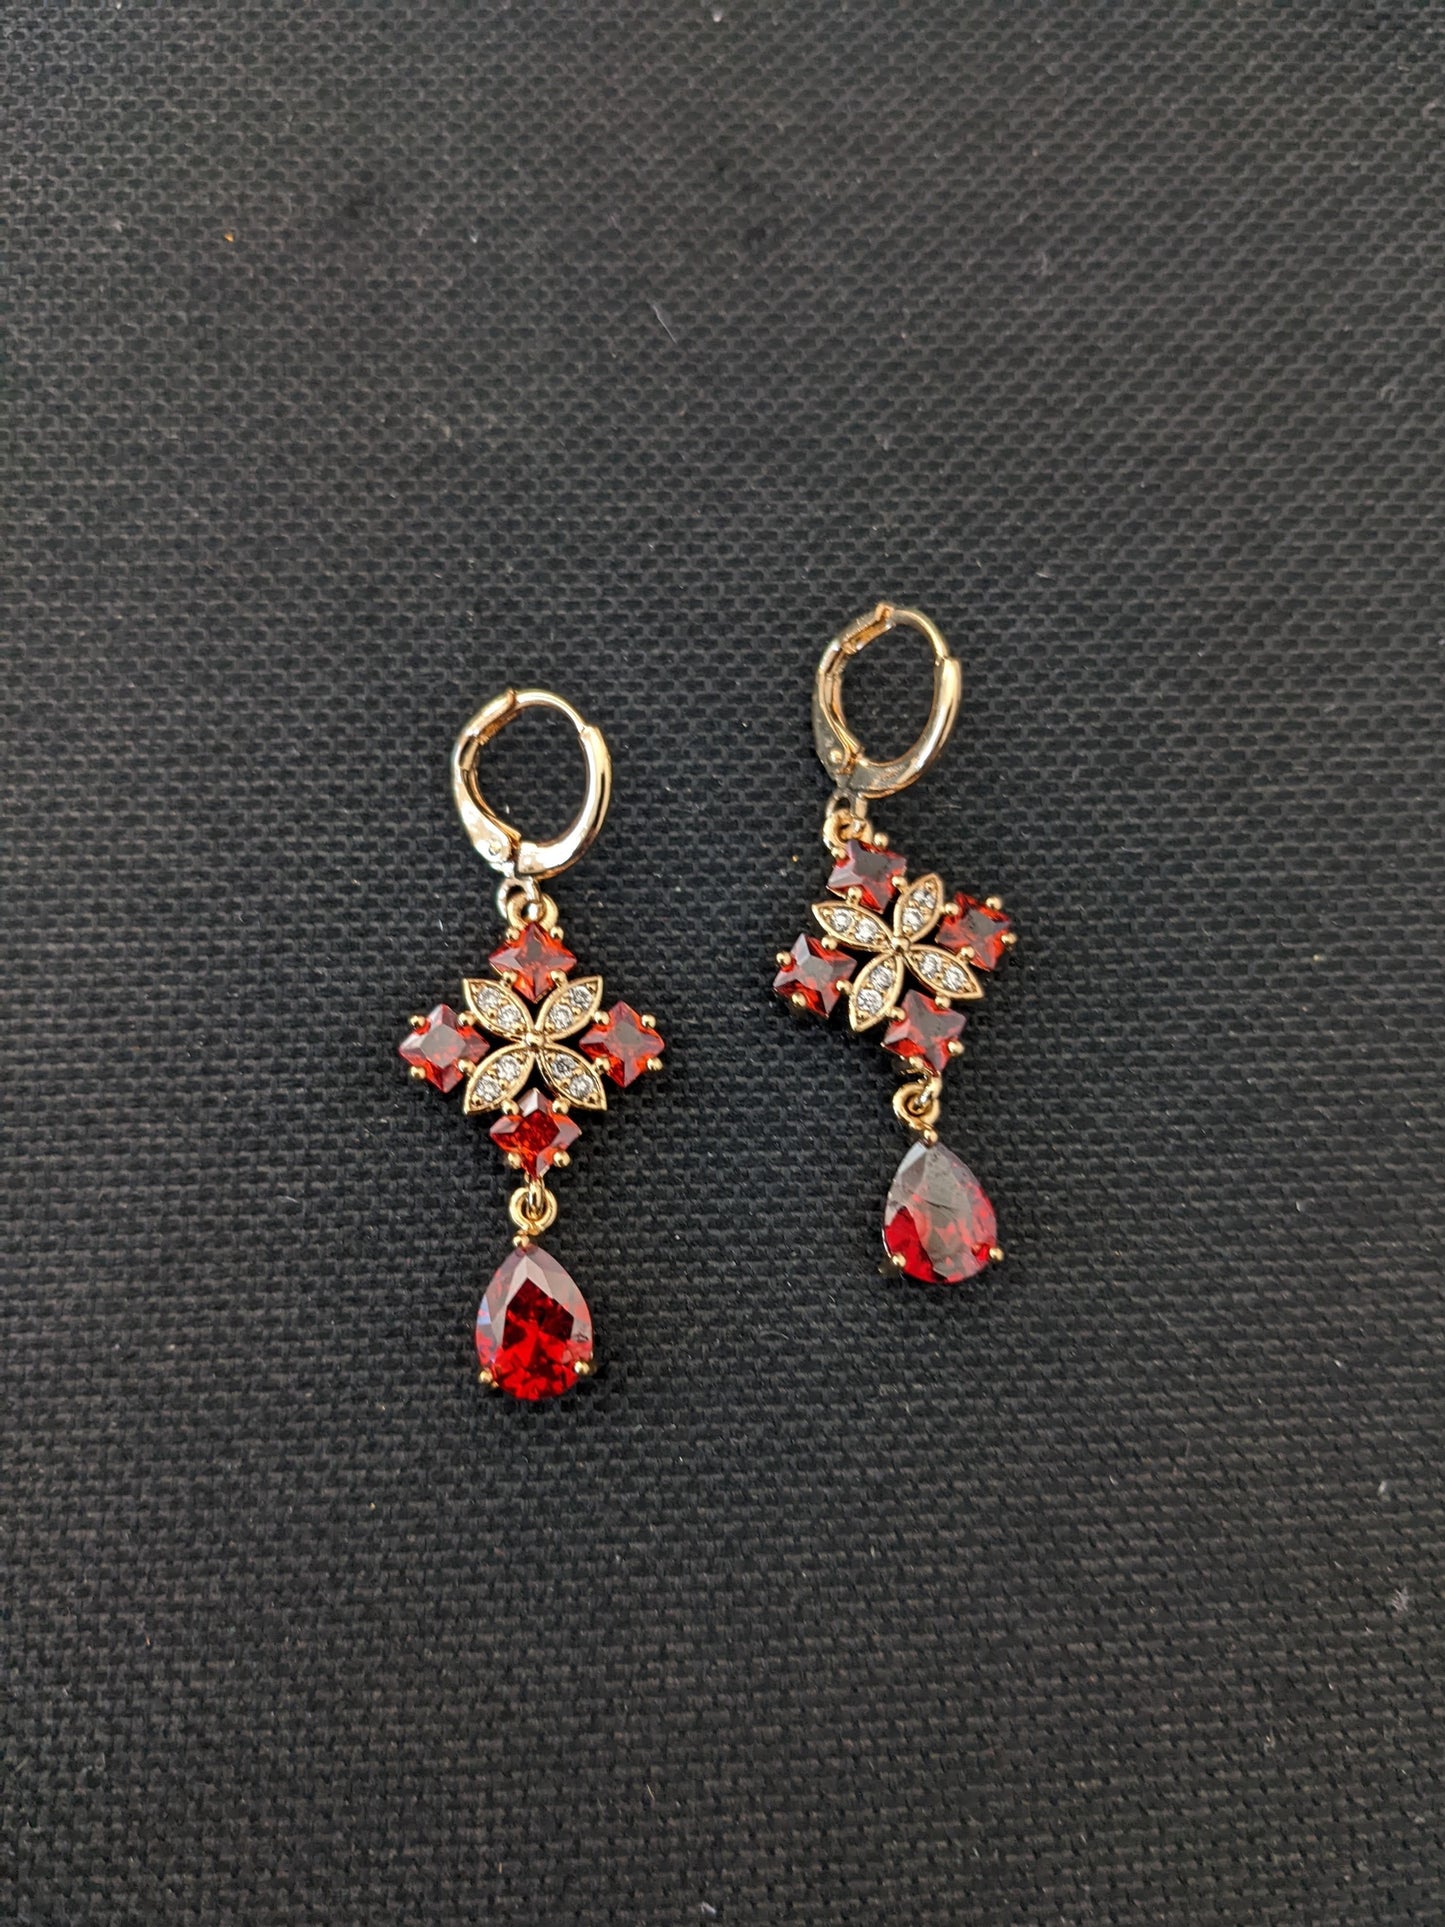 Diamond Flower design CZ stone ring style drop earrings